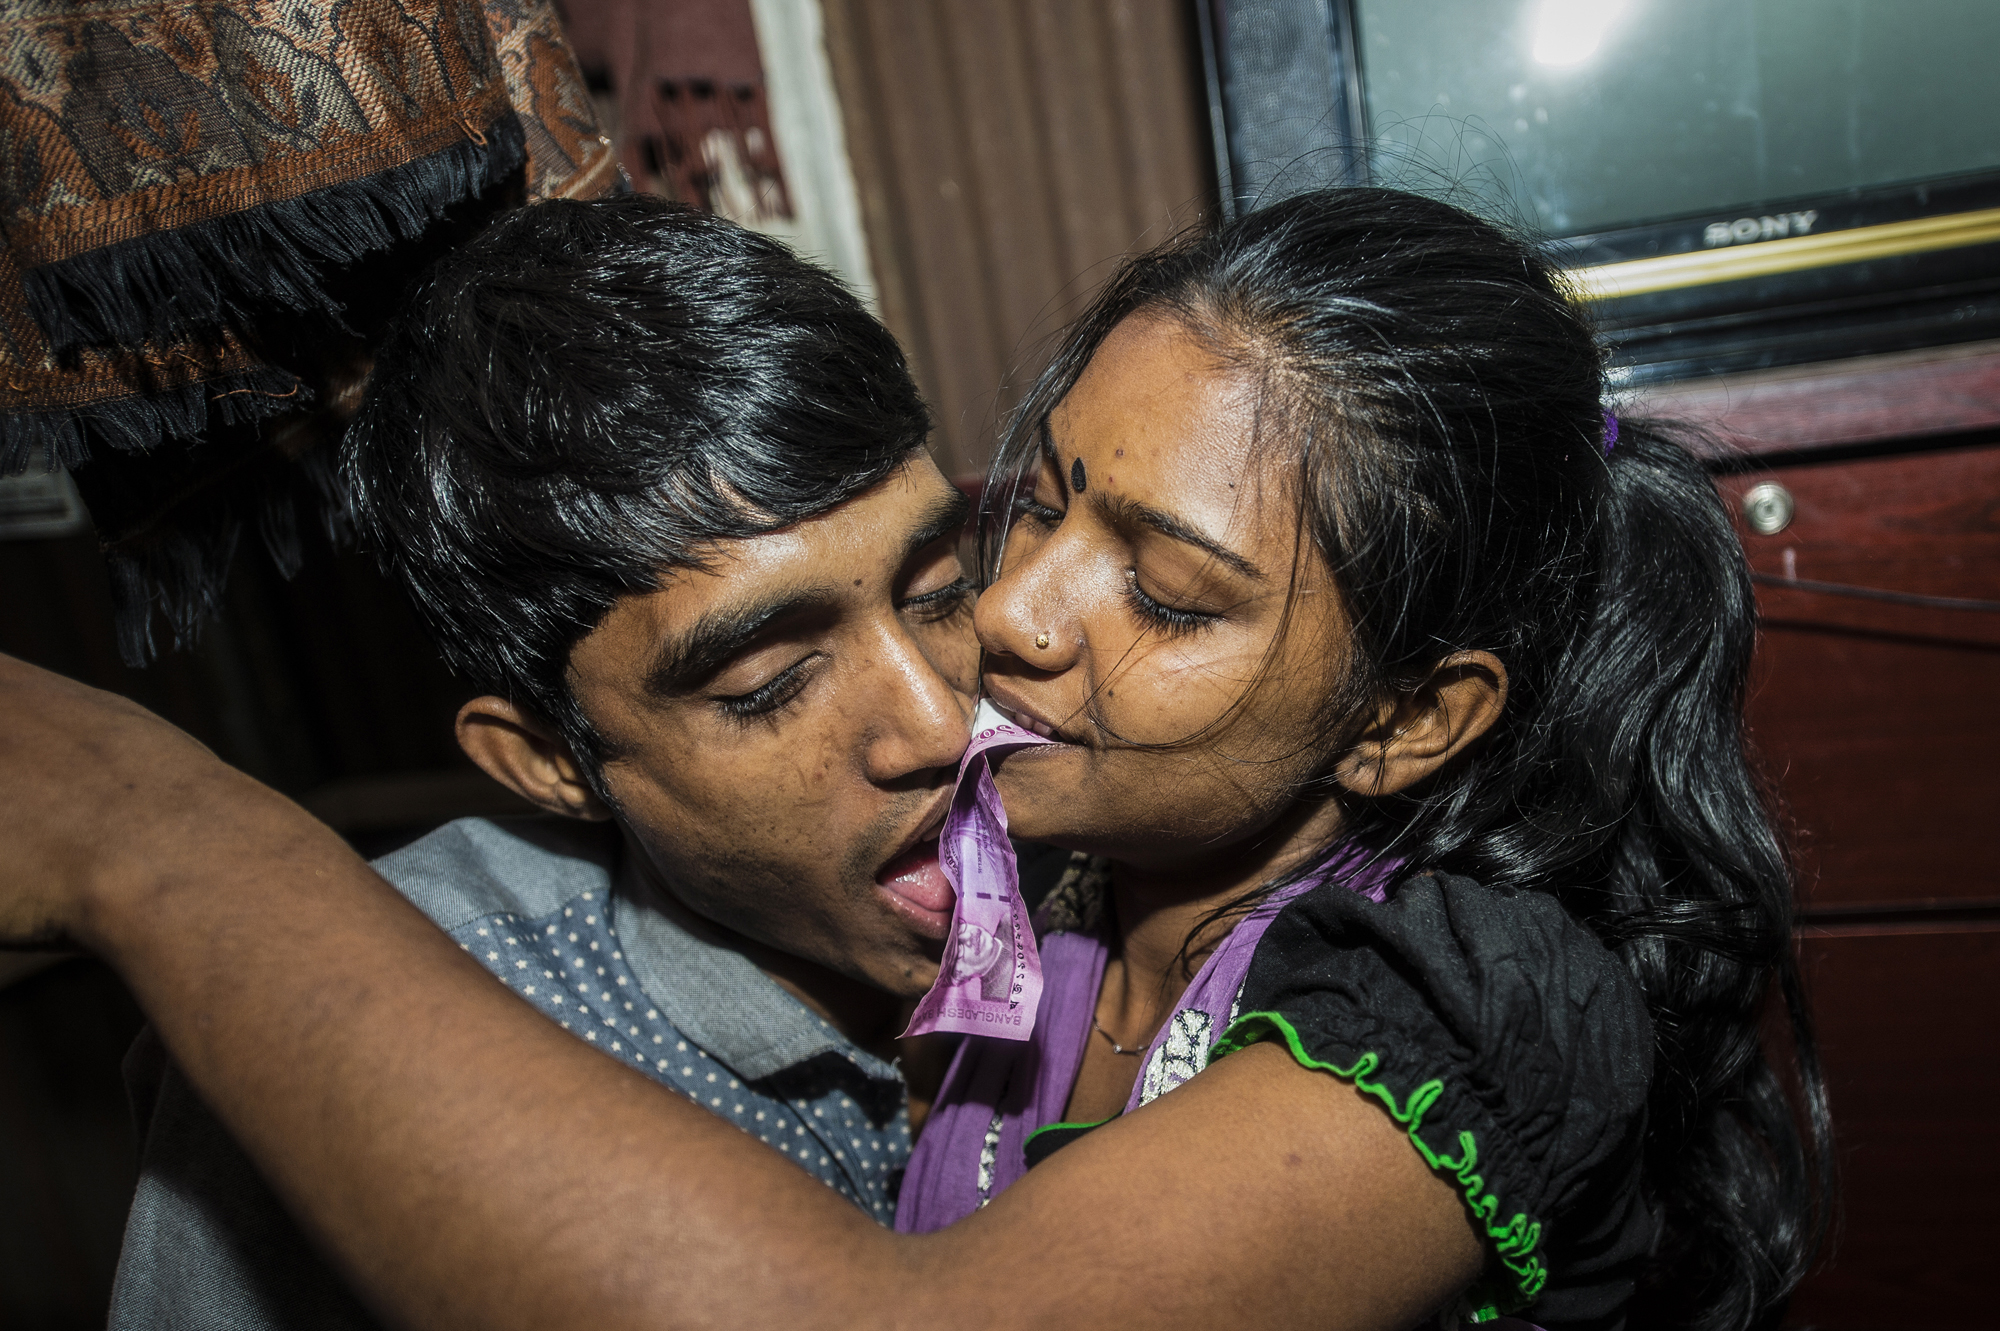 Проститутки Бангладеш Цена